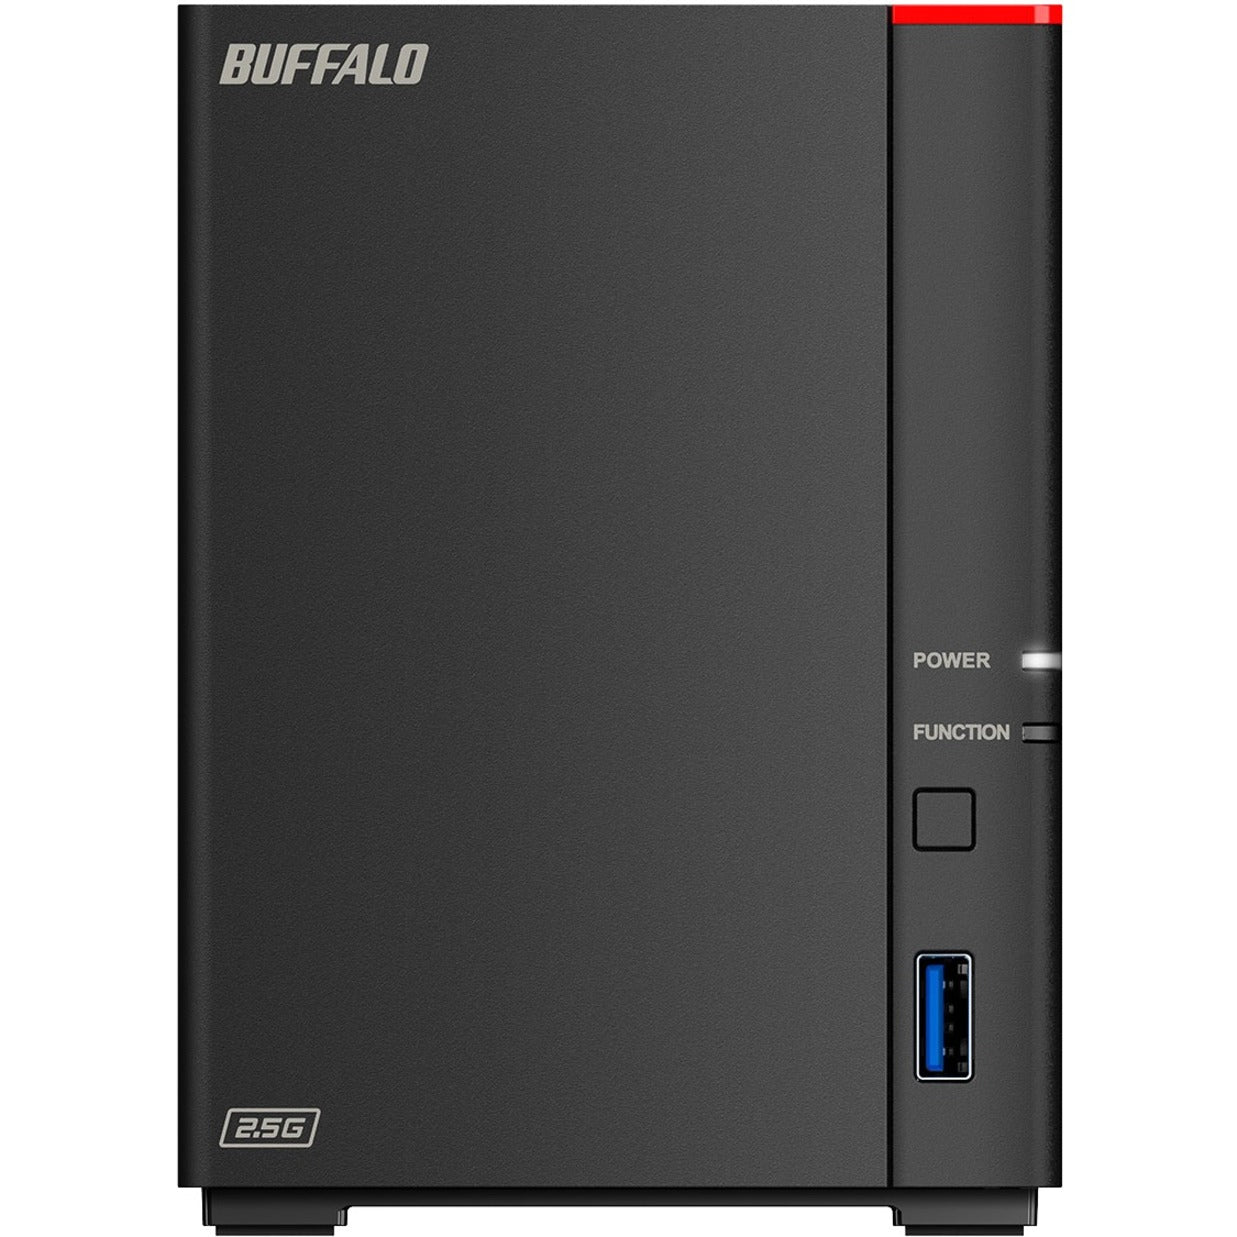 Buffalo LS720D0402B LinkStation SoHo 720DB 4TB Hard Drives Included (2 x 2TB, 2 Bay), 3 Year Warranty